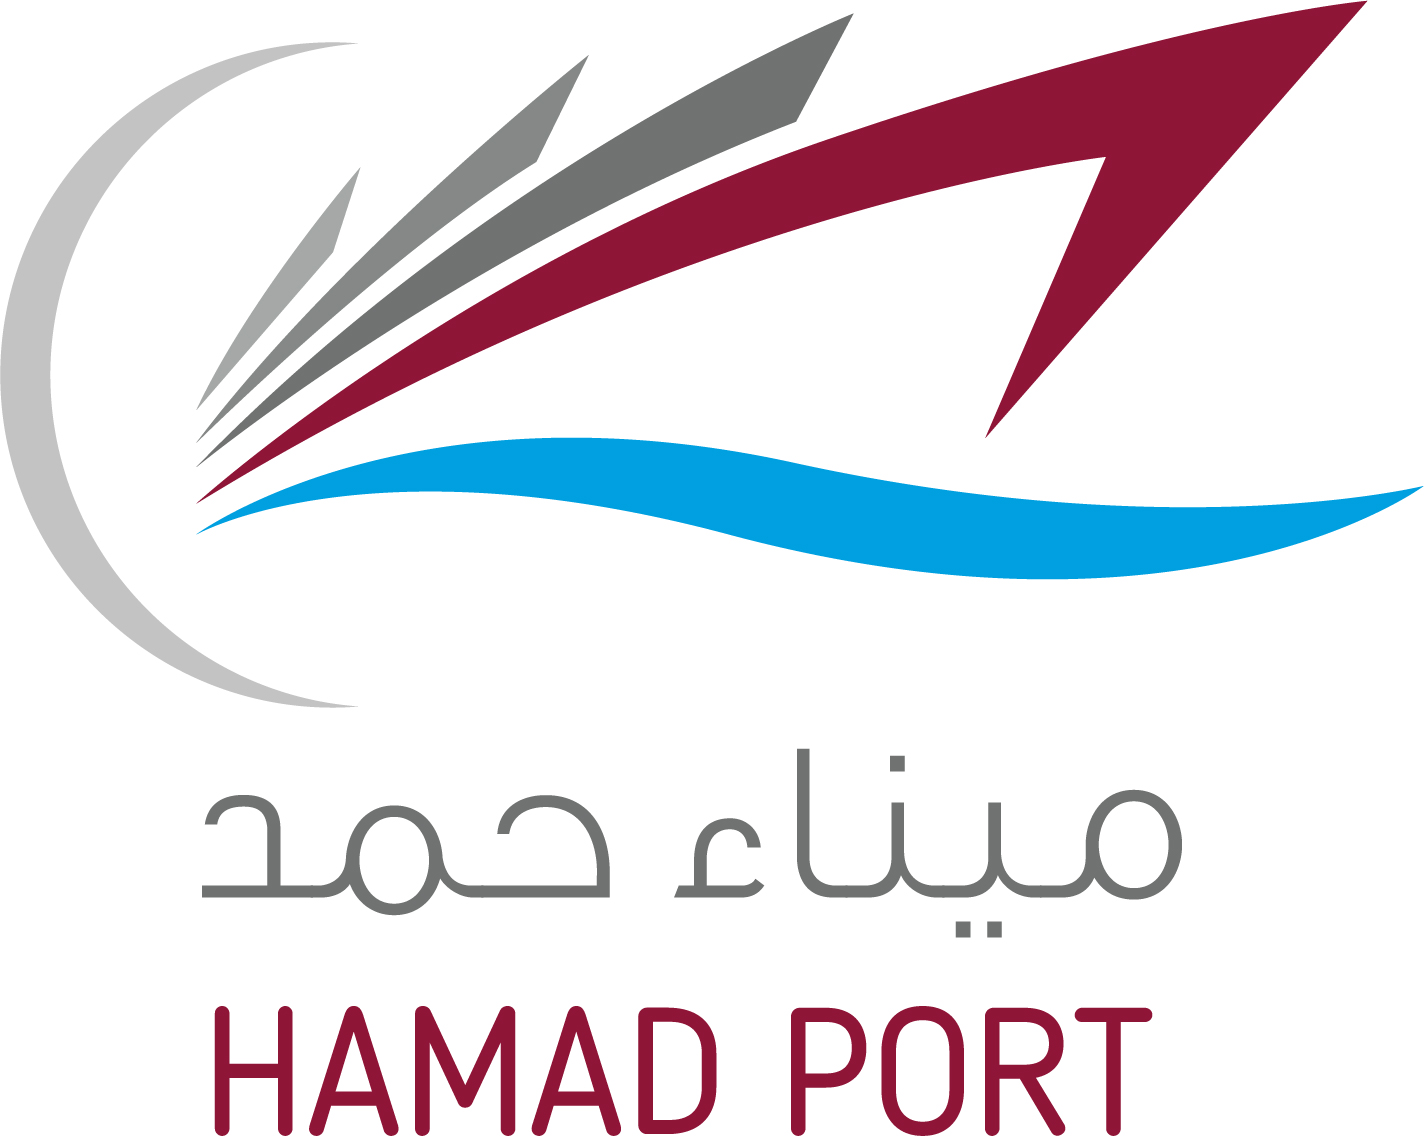 Hamad port logo